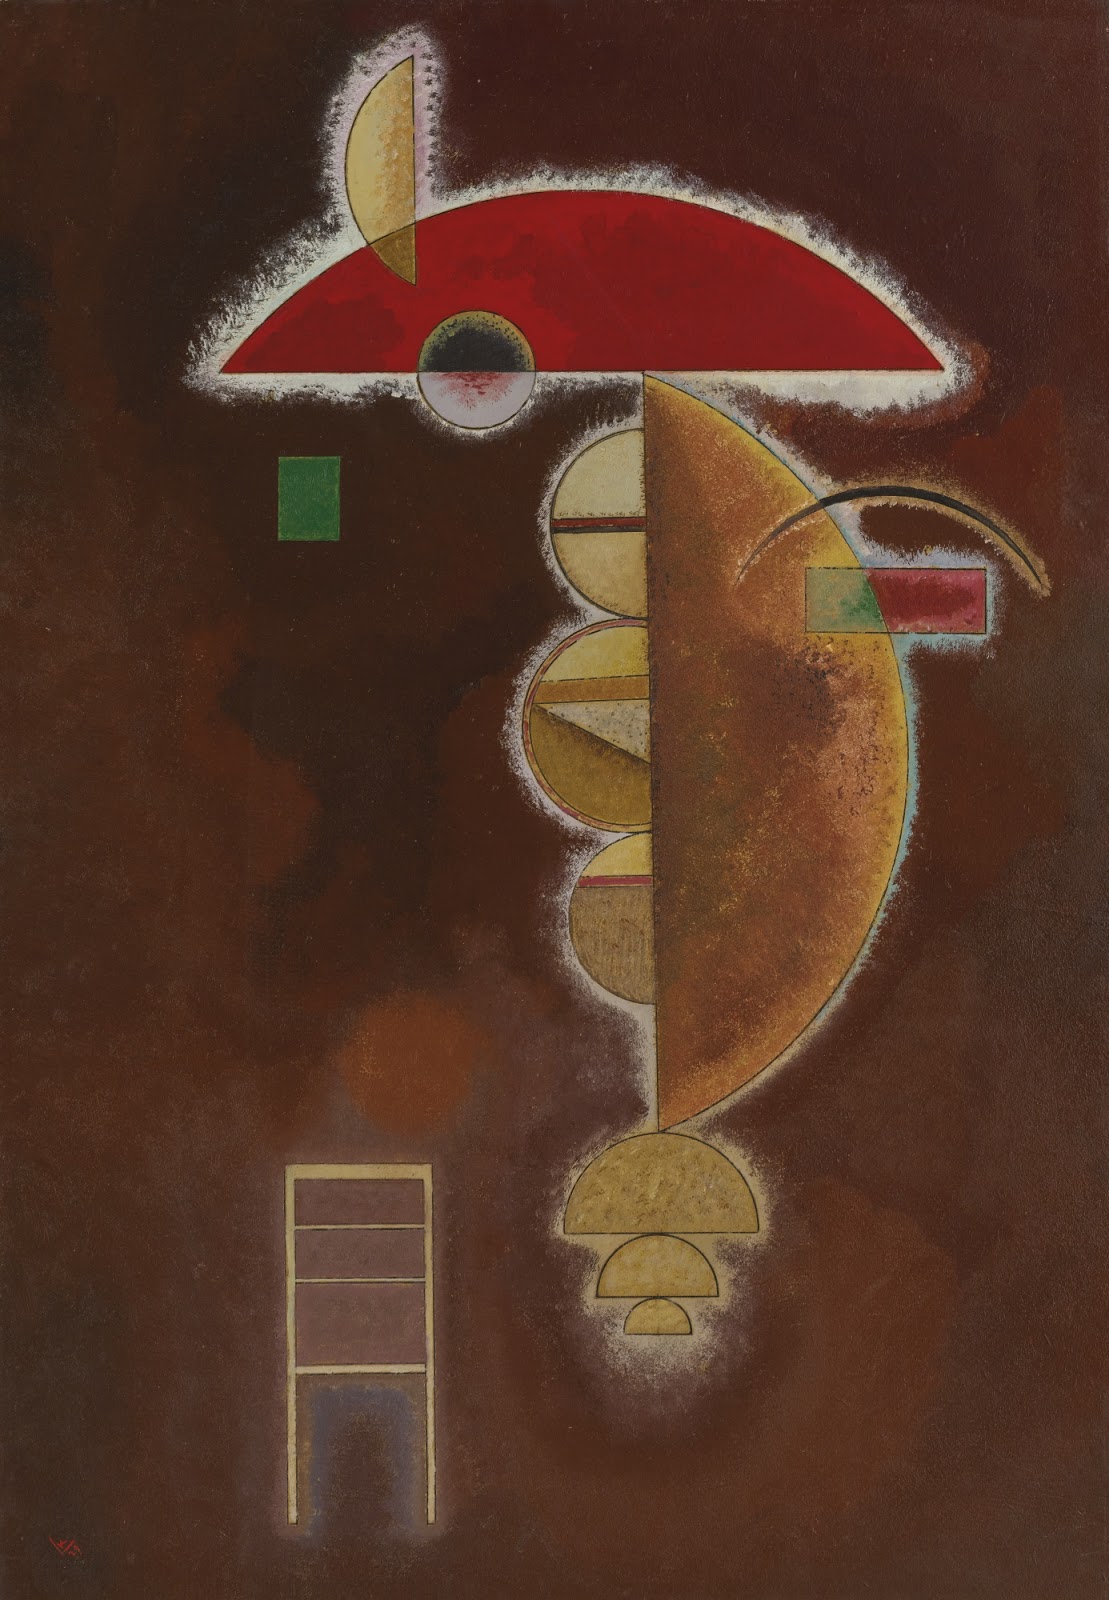 Wassily+Kandinsky-1866-1944 (329).jpg